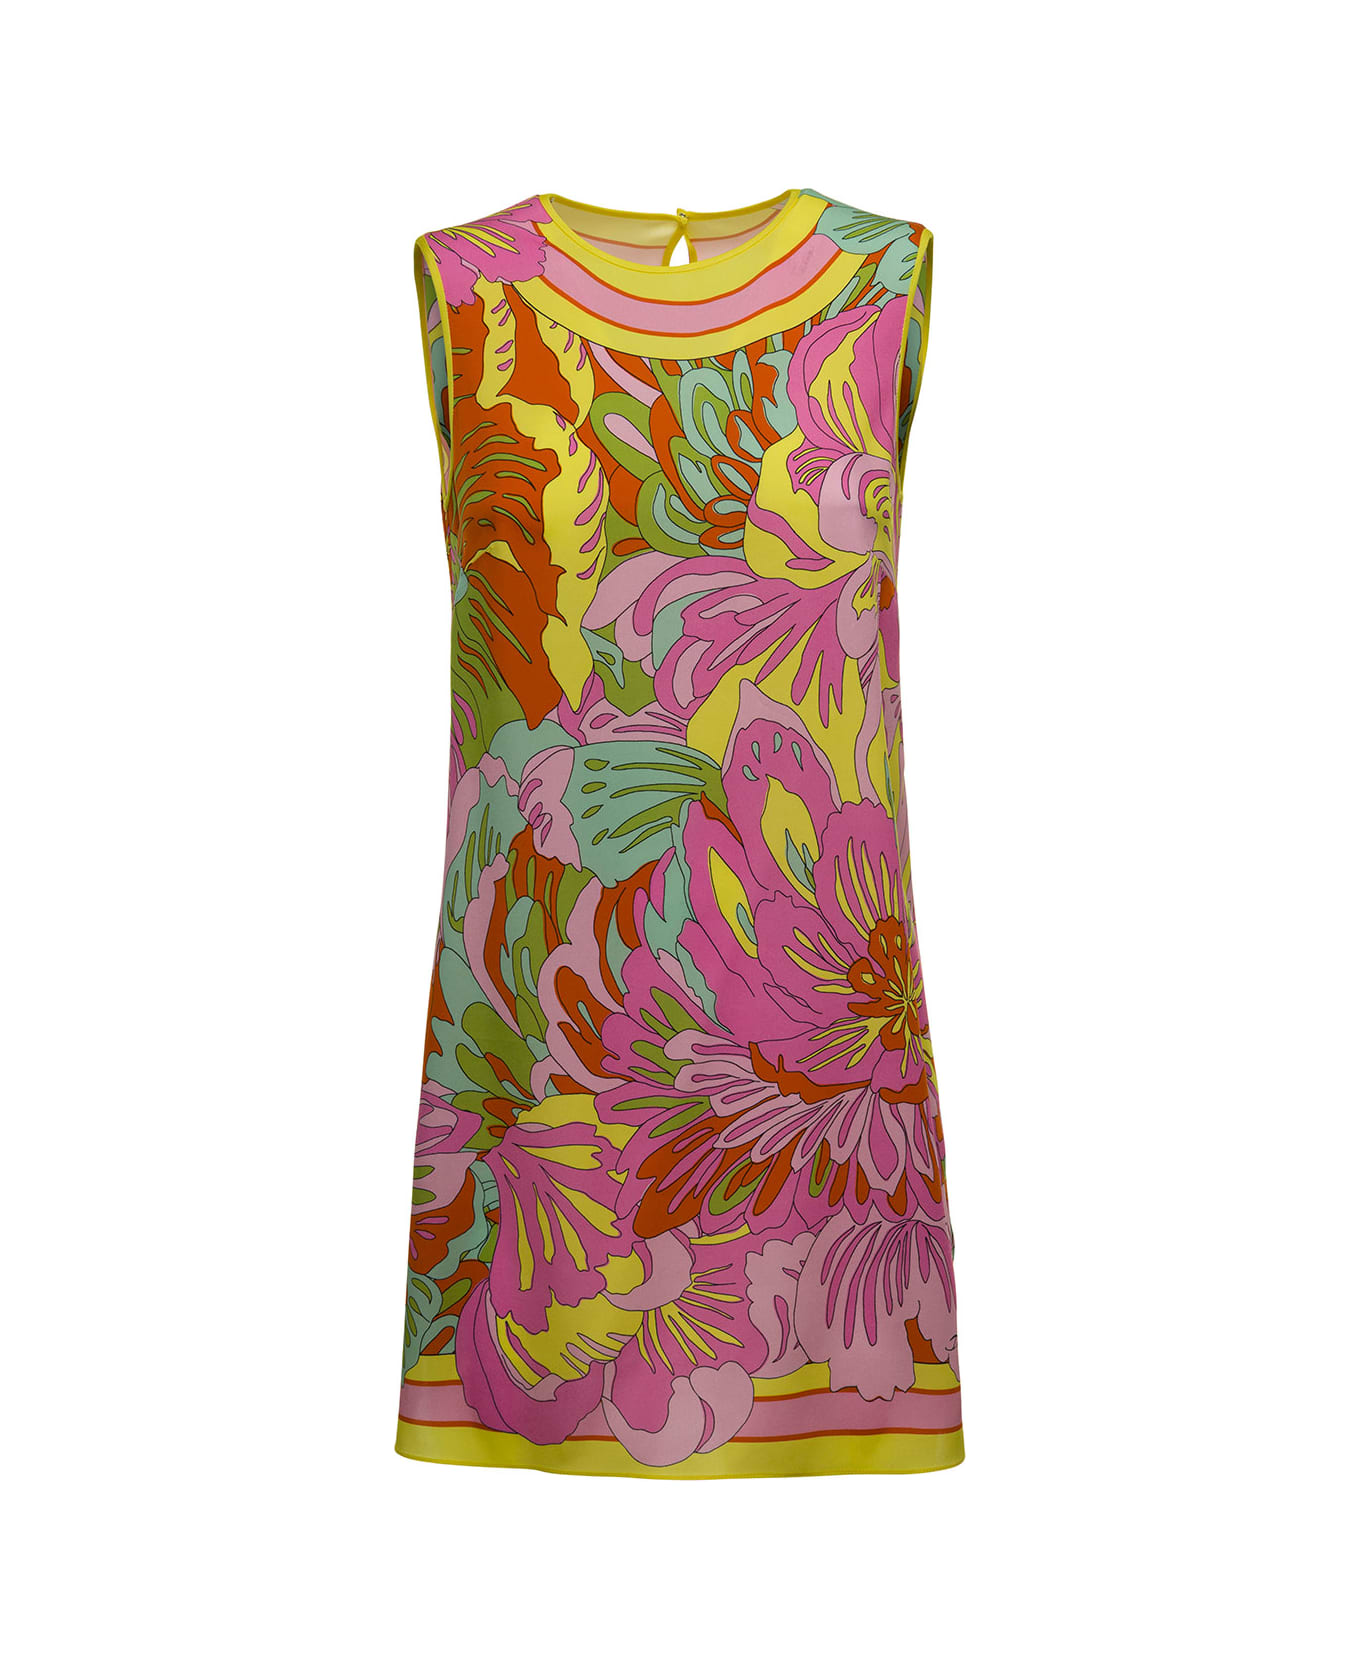 Dolce & Gabbana Multiccolor Silk Dress With 60's Charmeuse Print - Multicolor